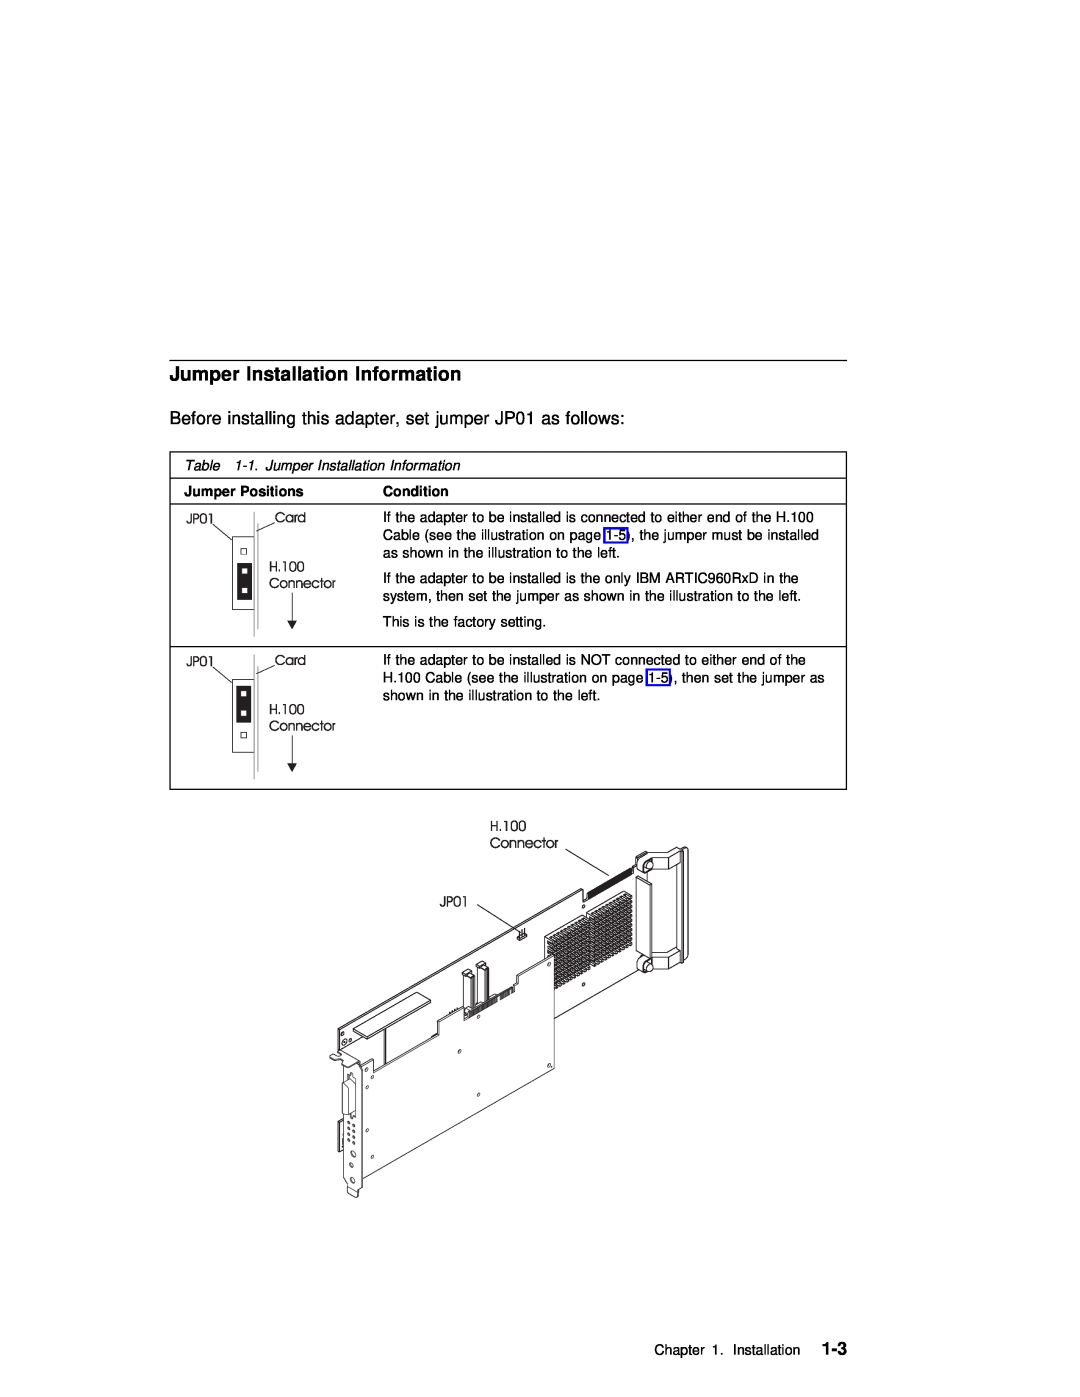 IBM ARTIC960RxD manual Jumper Installation Information, Before installing this adapter, set jumper JP01 as follows 